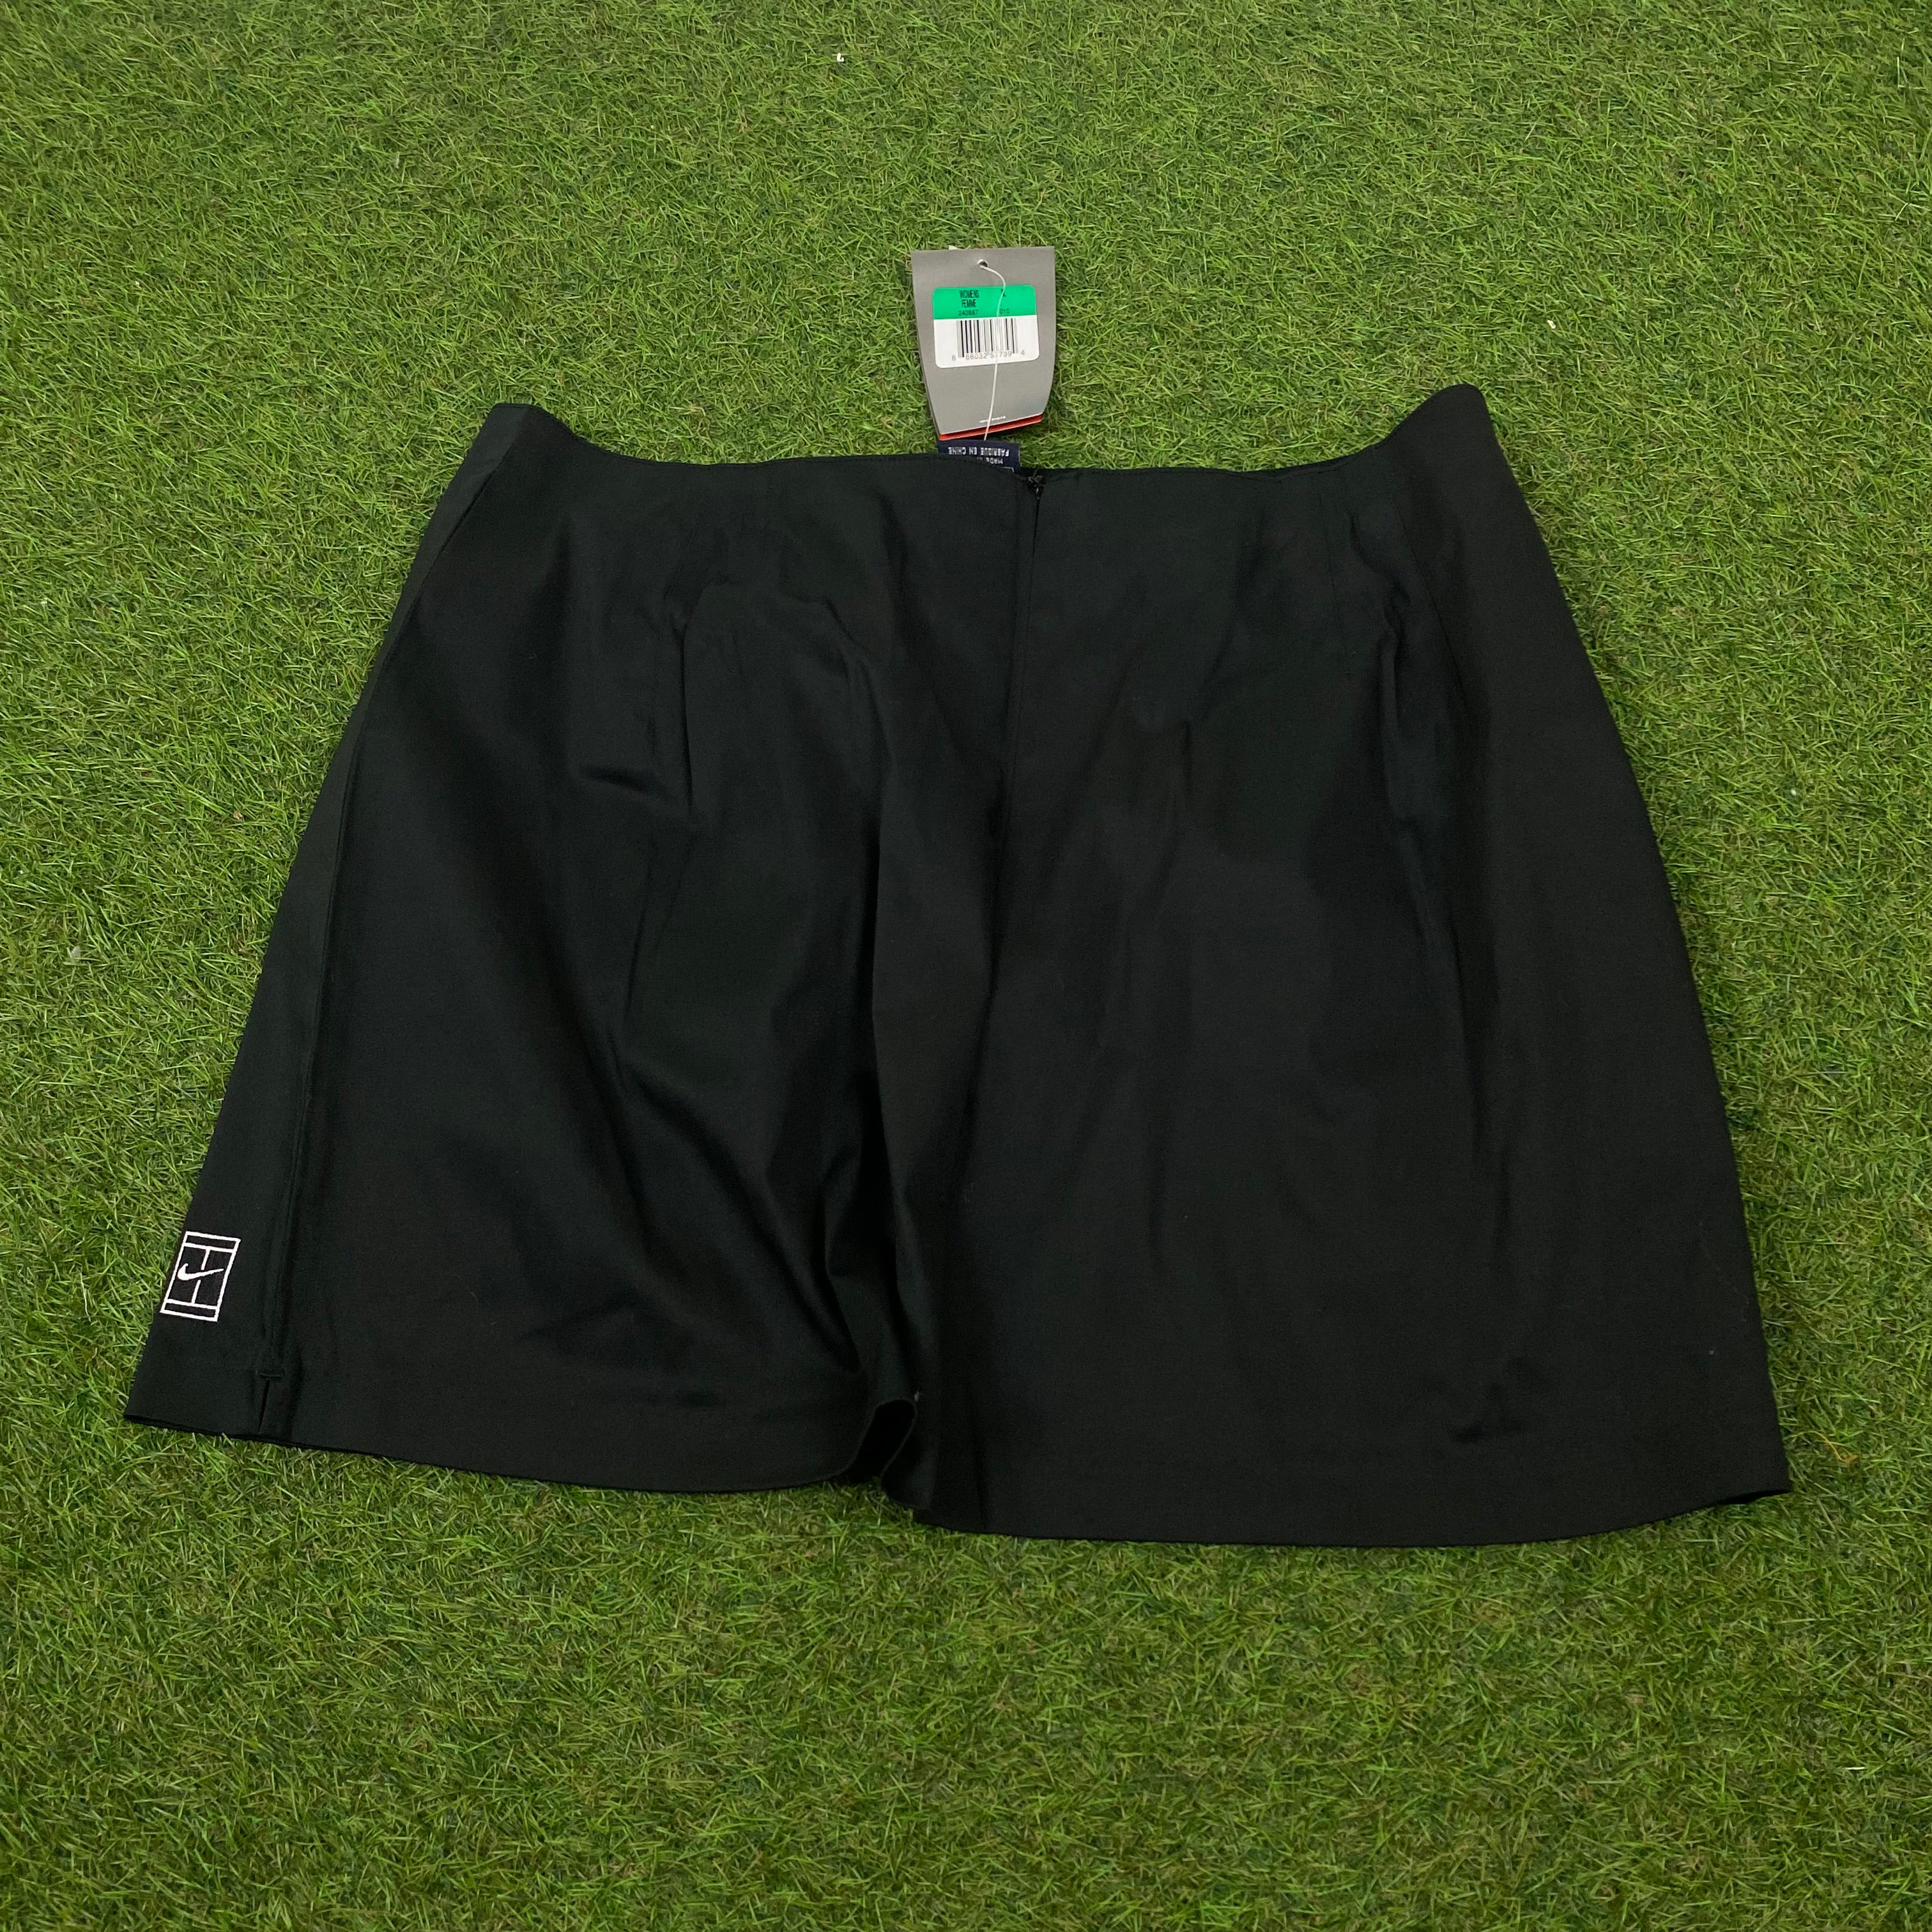 Vintage Nike Tennis Skirt Black XL